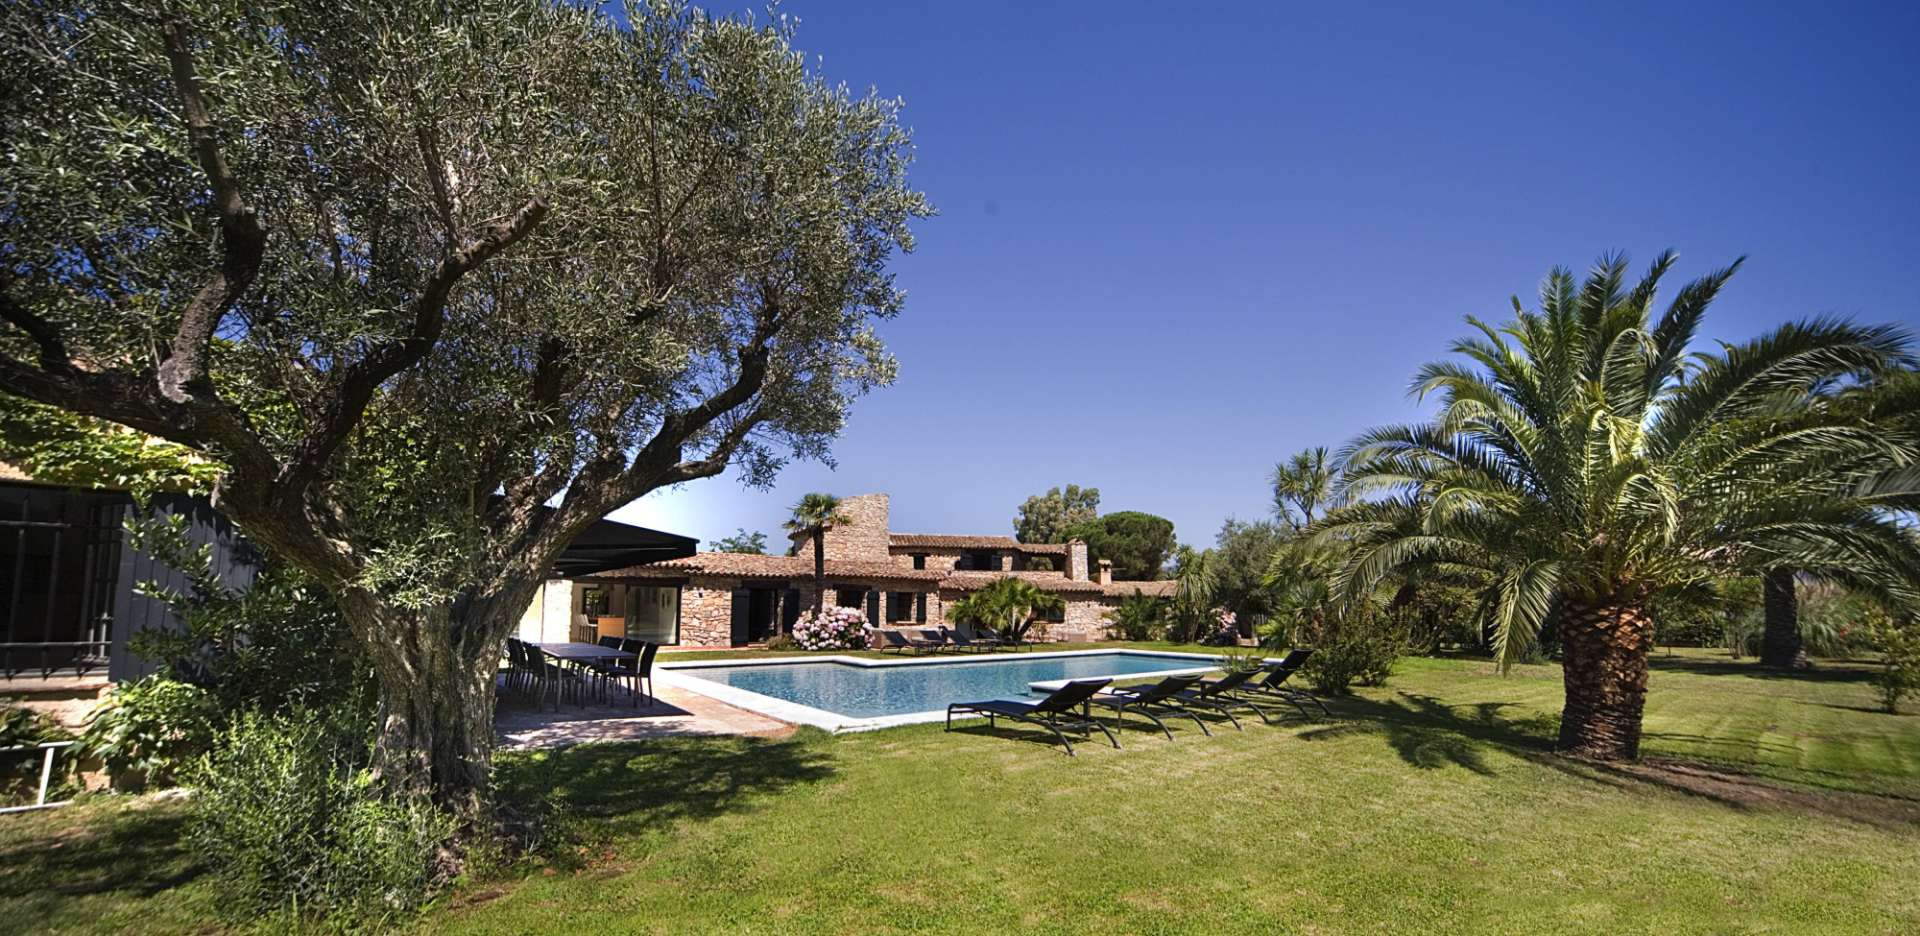 Rent villa near the beach in Saint Tropez